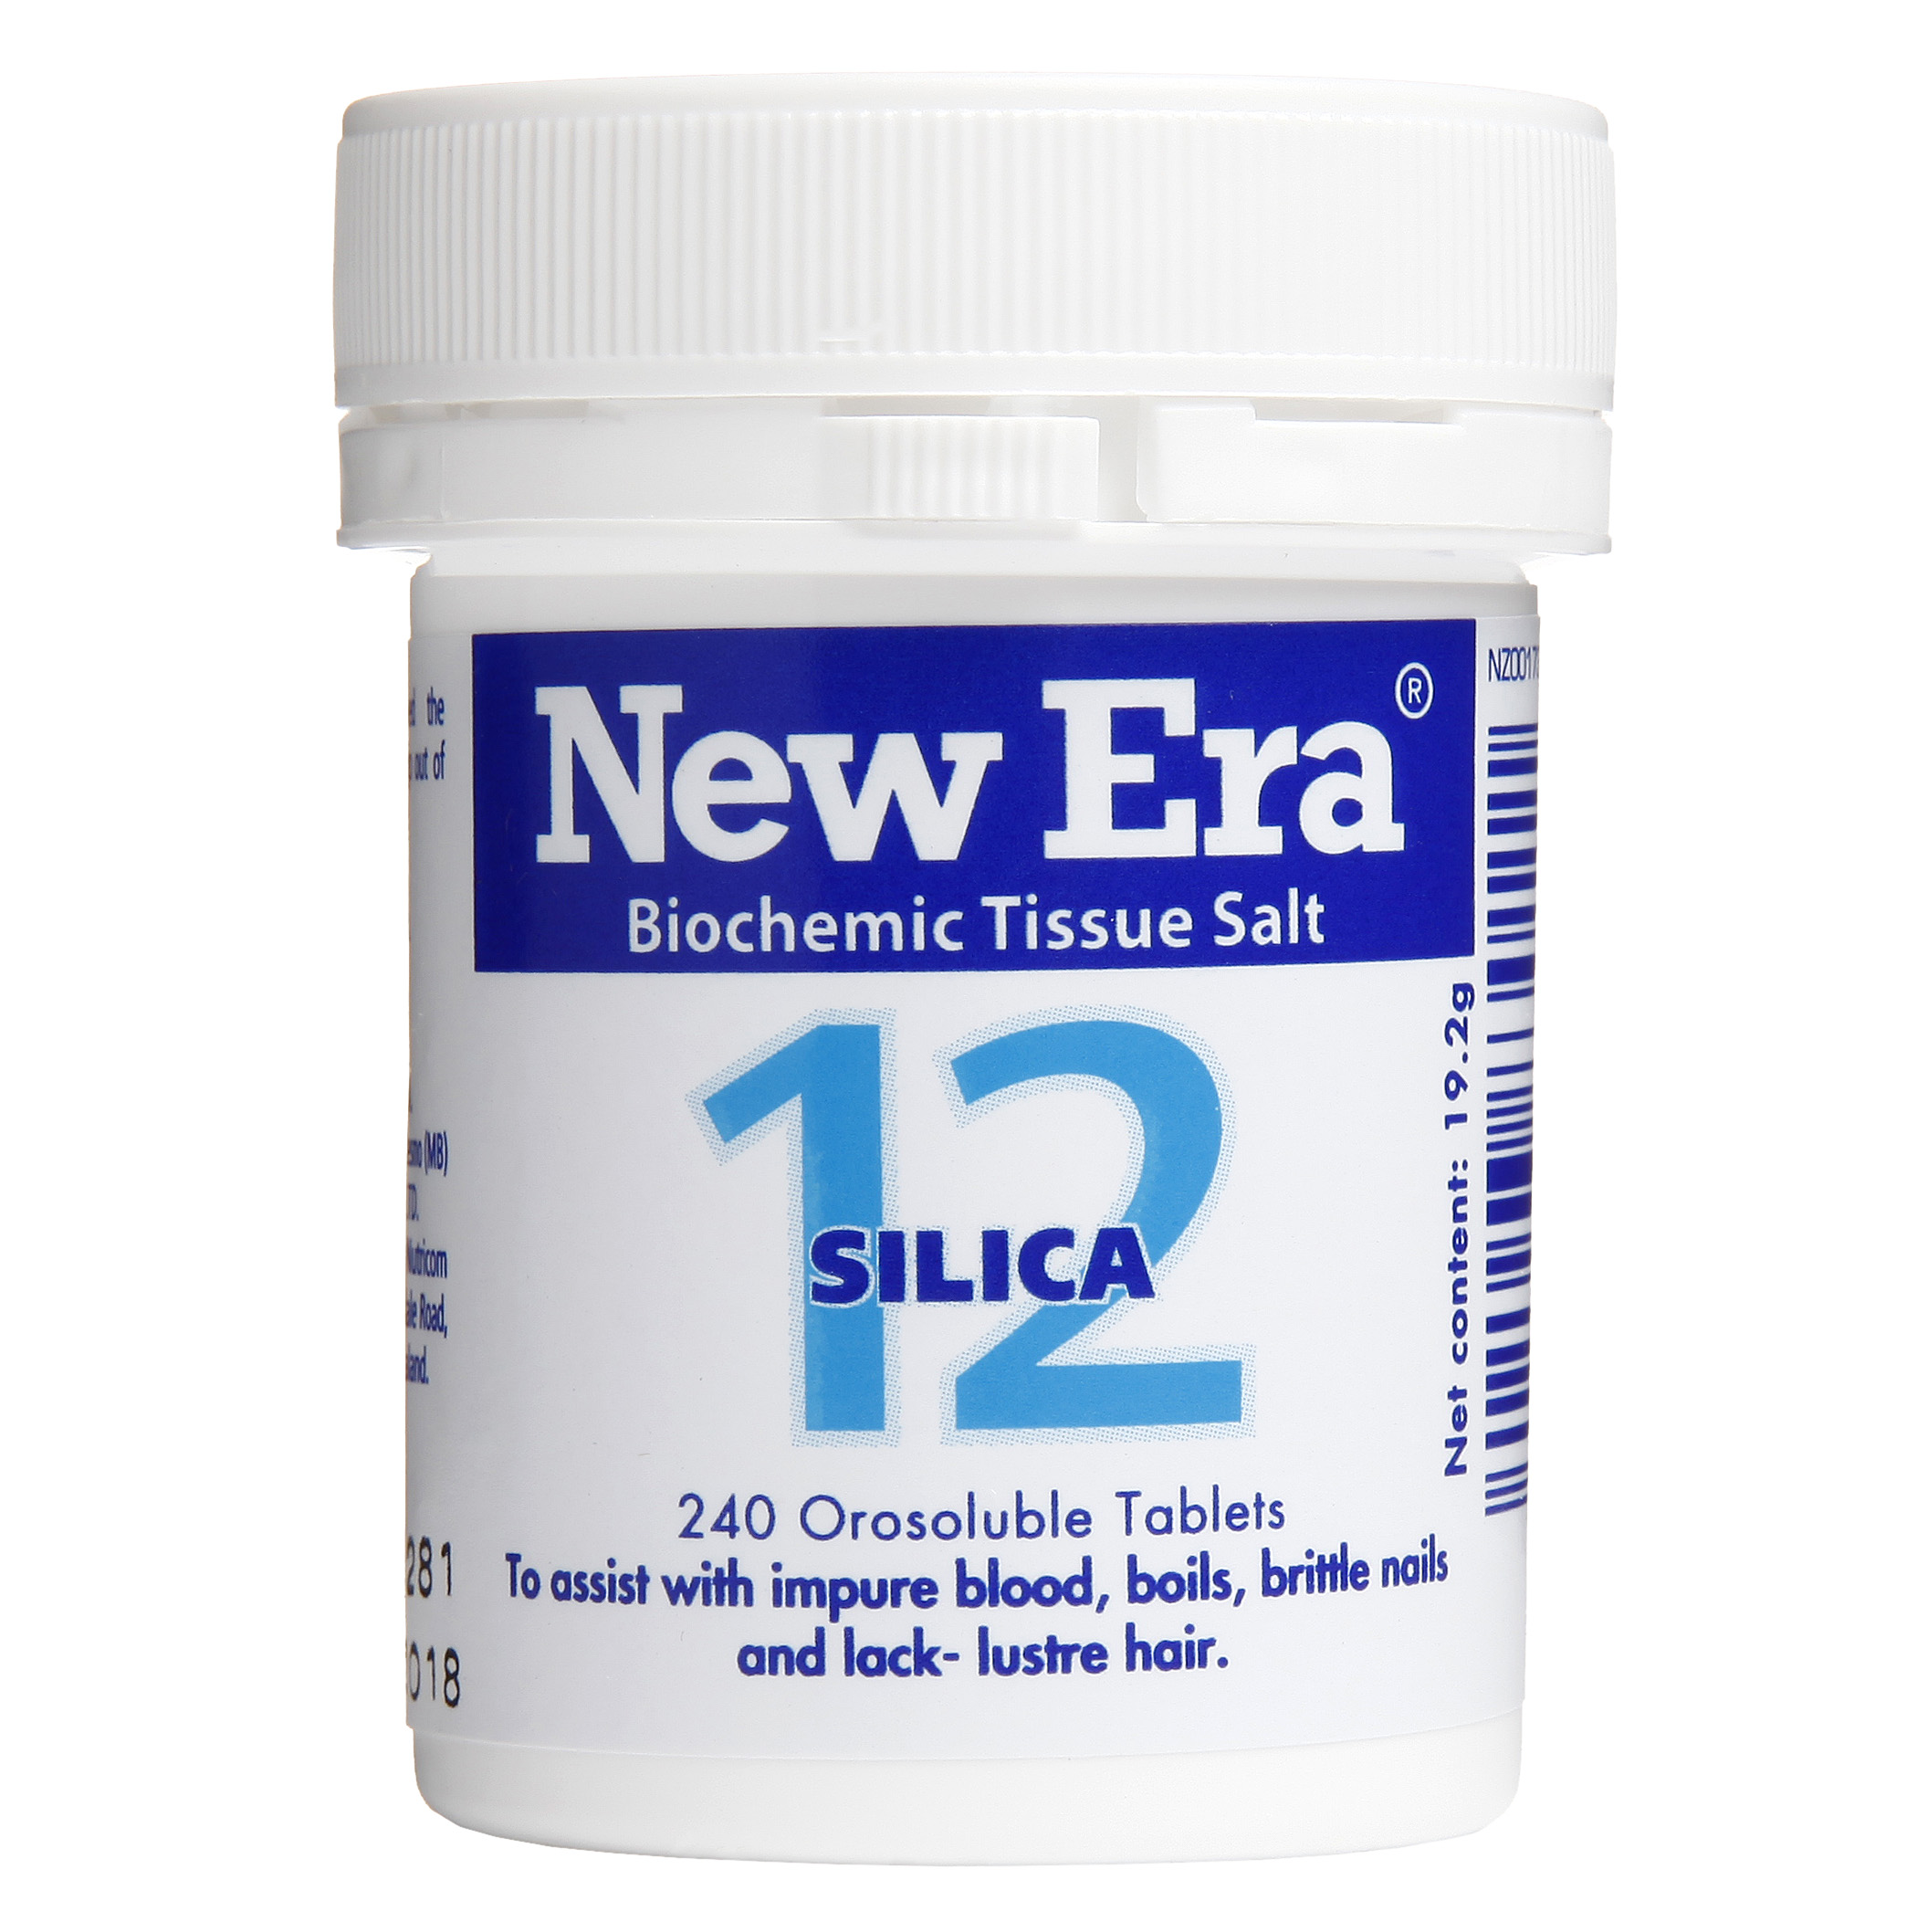 New Era Tissue Salt Silica #12 - The Tissue Strengthener